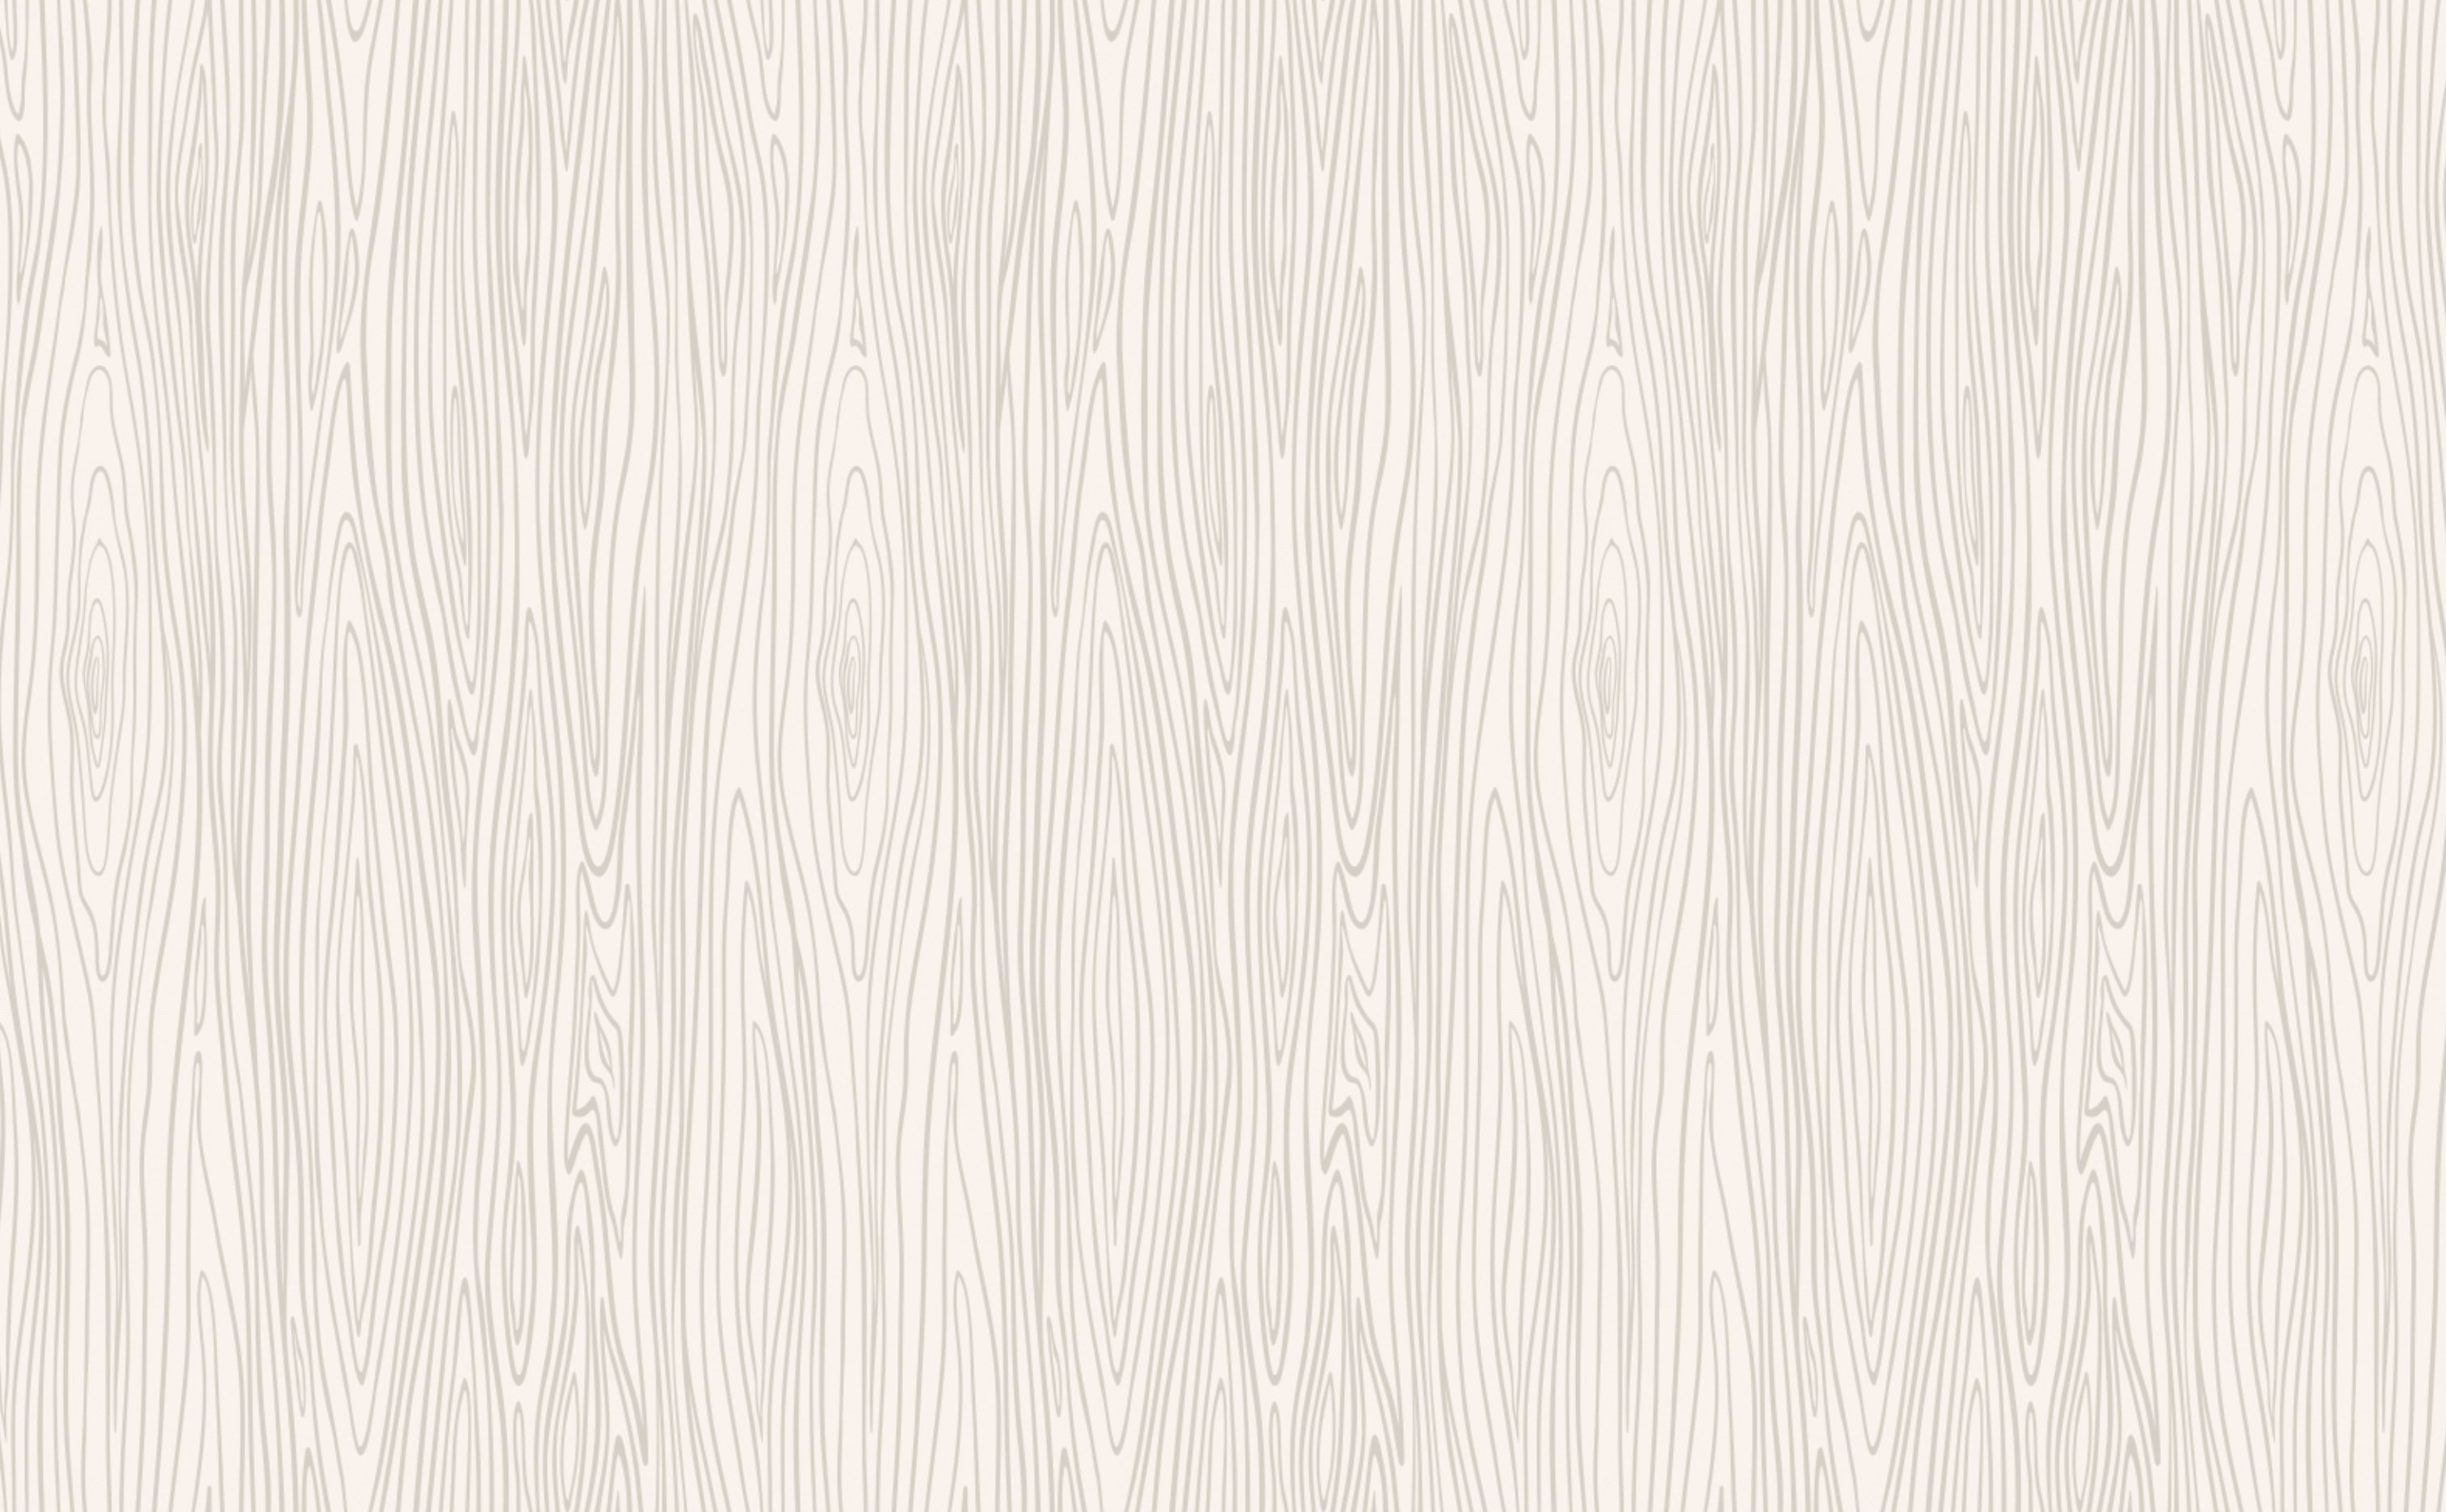 Wood Grain Desktop Wallpaper 51 images